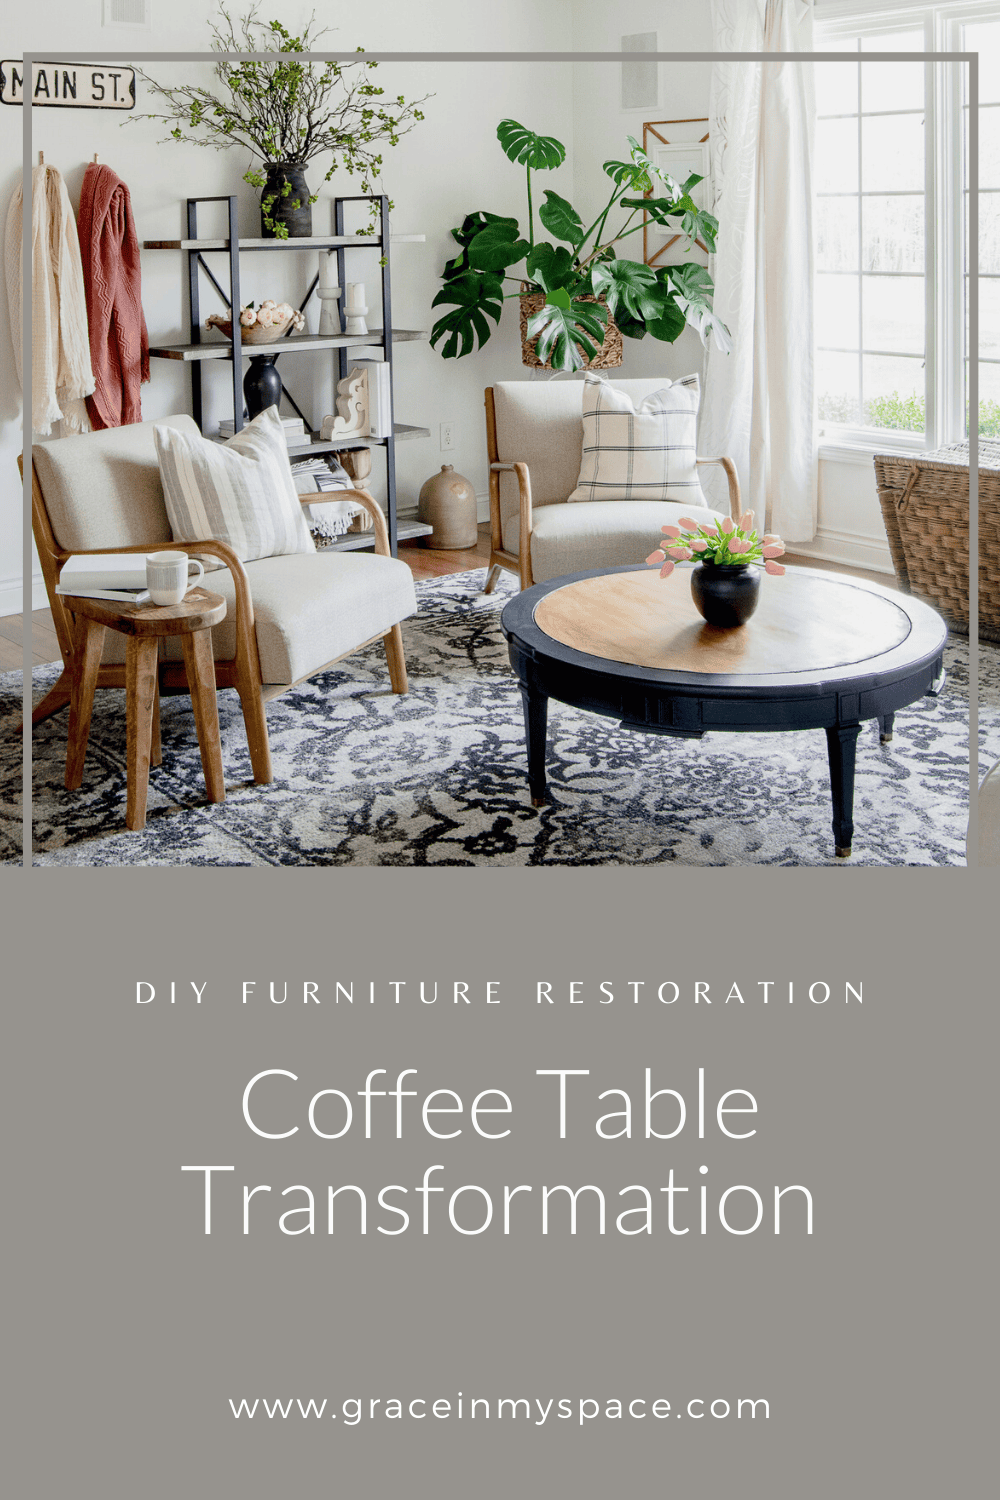 DIY Furniture Restoration